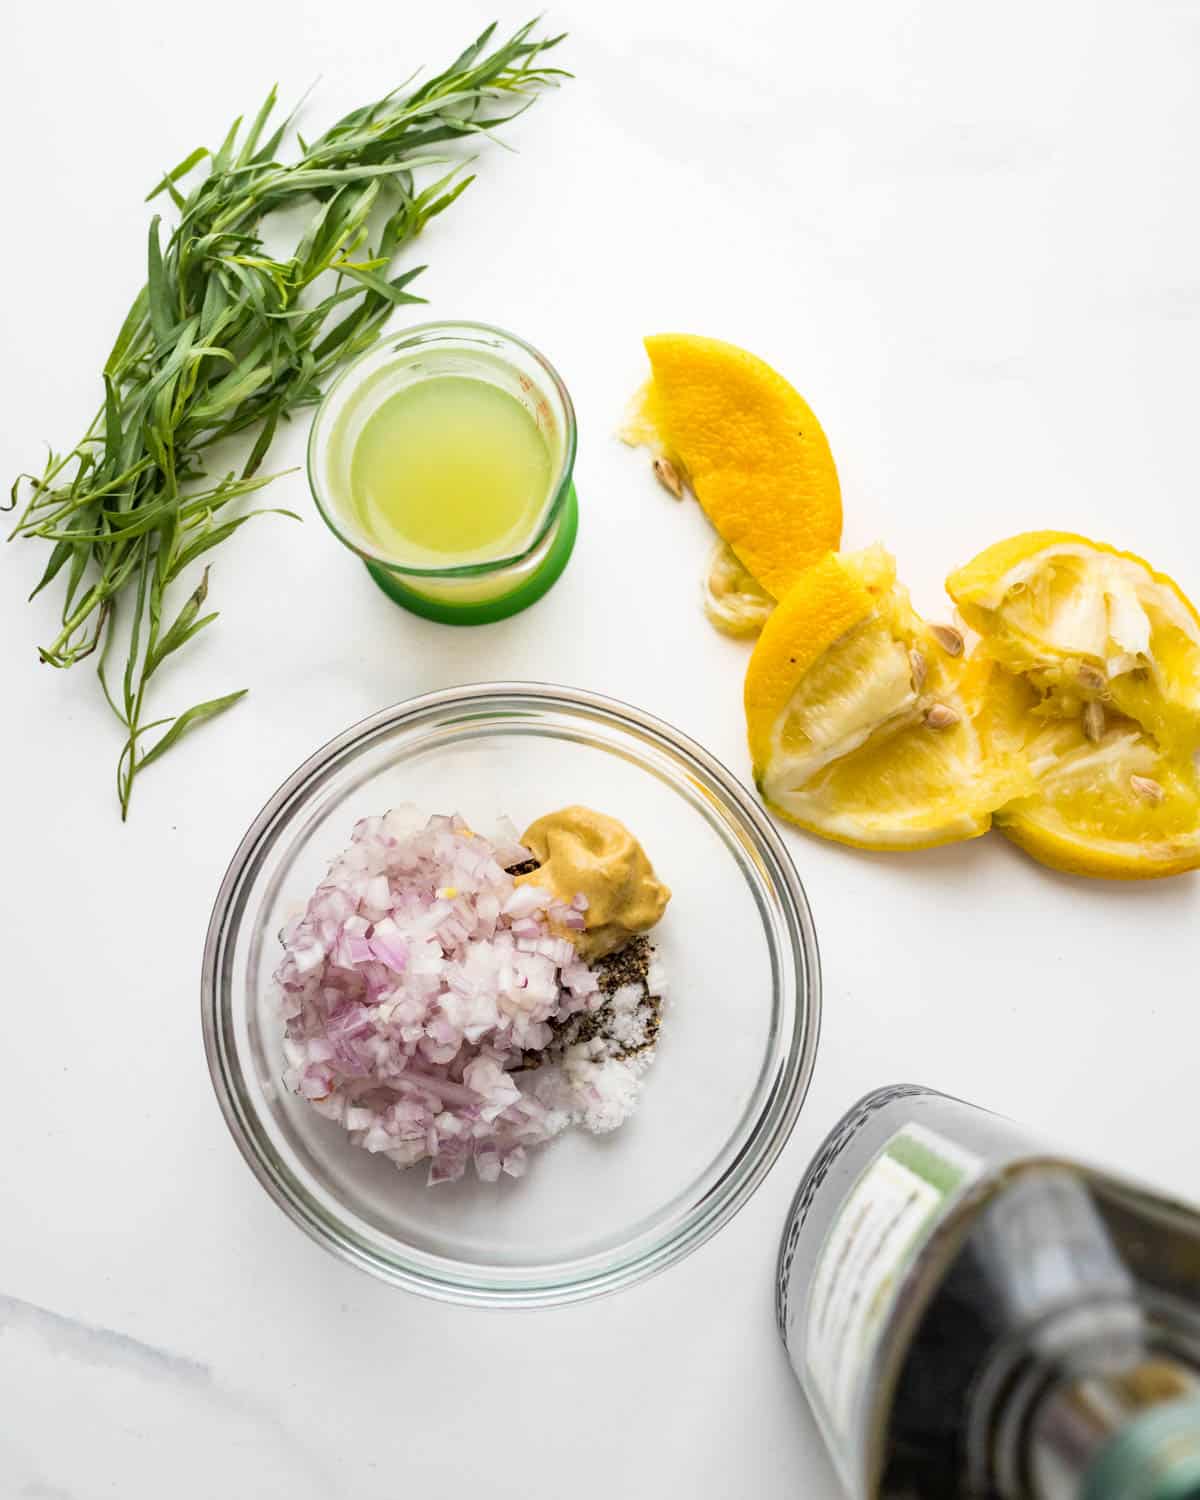 Ingredients for the lemon shallot and herb vinaigrette.